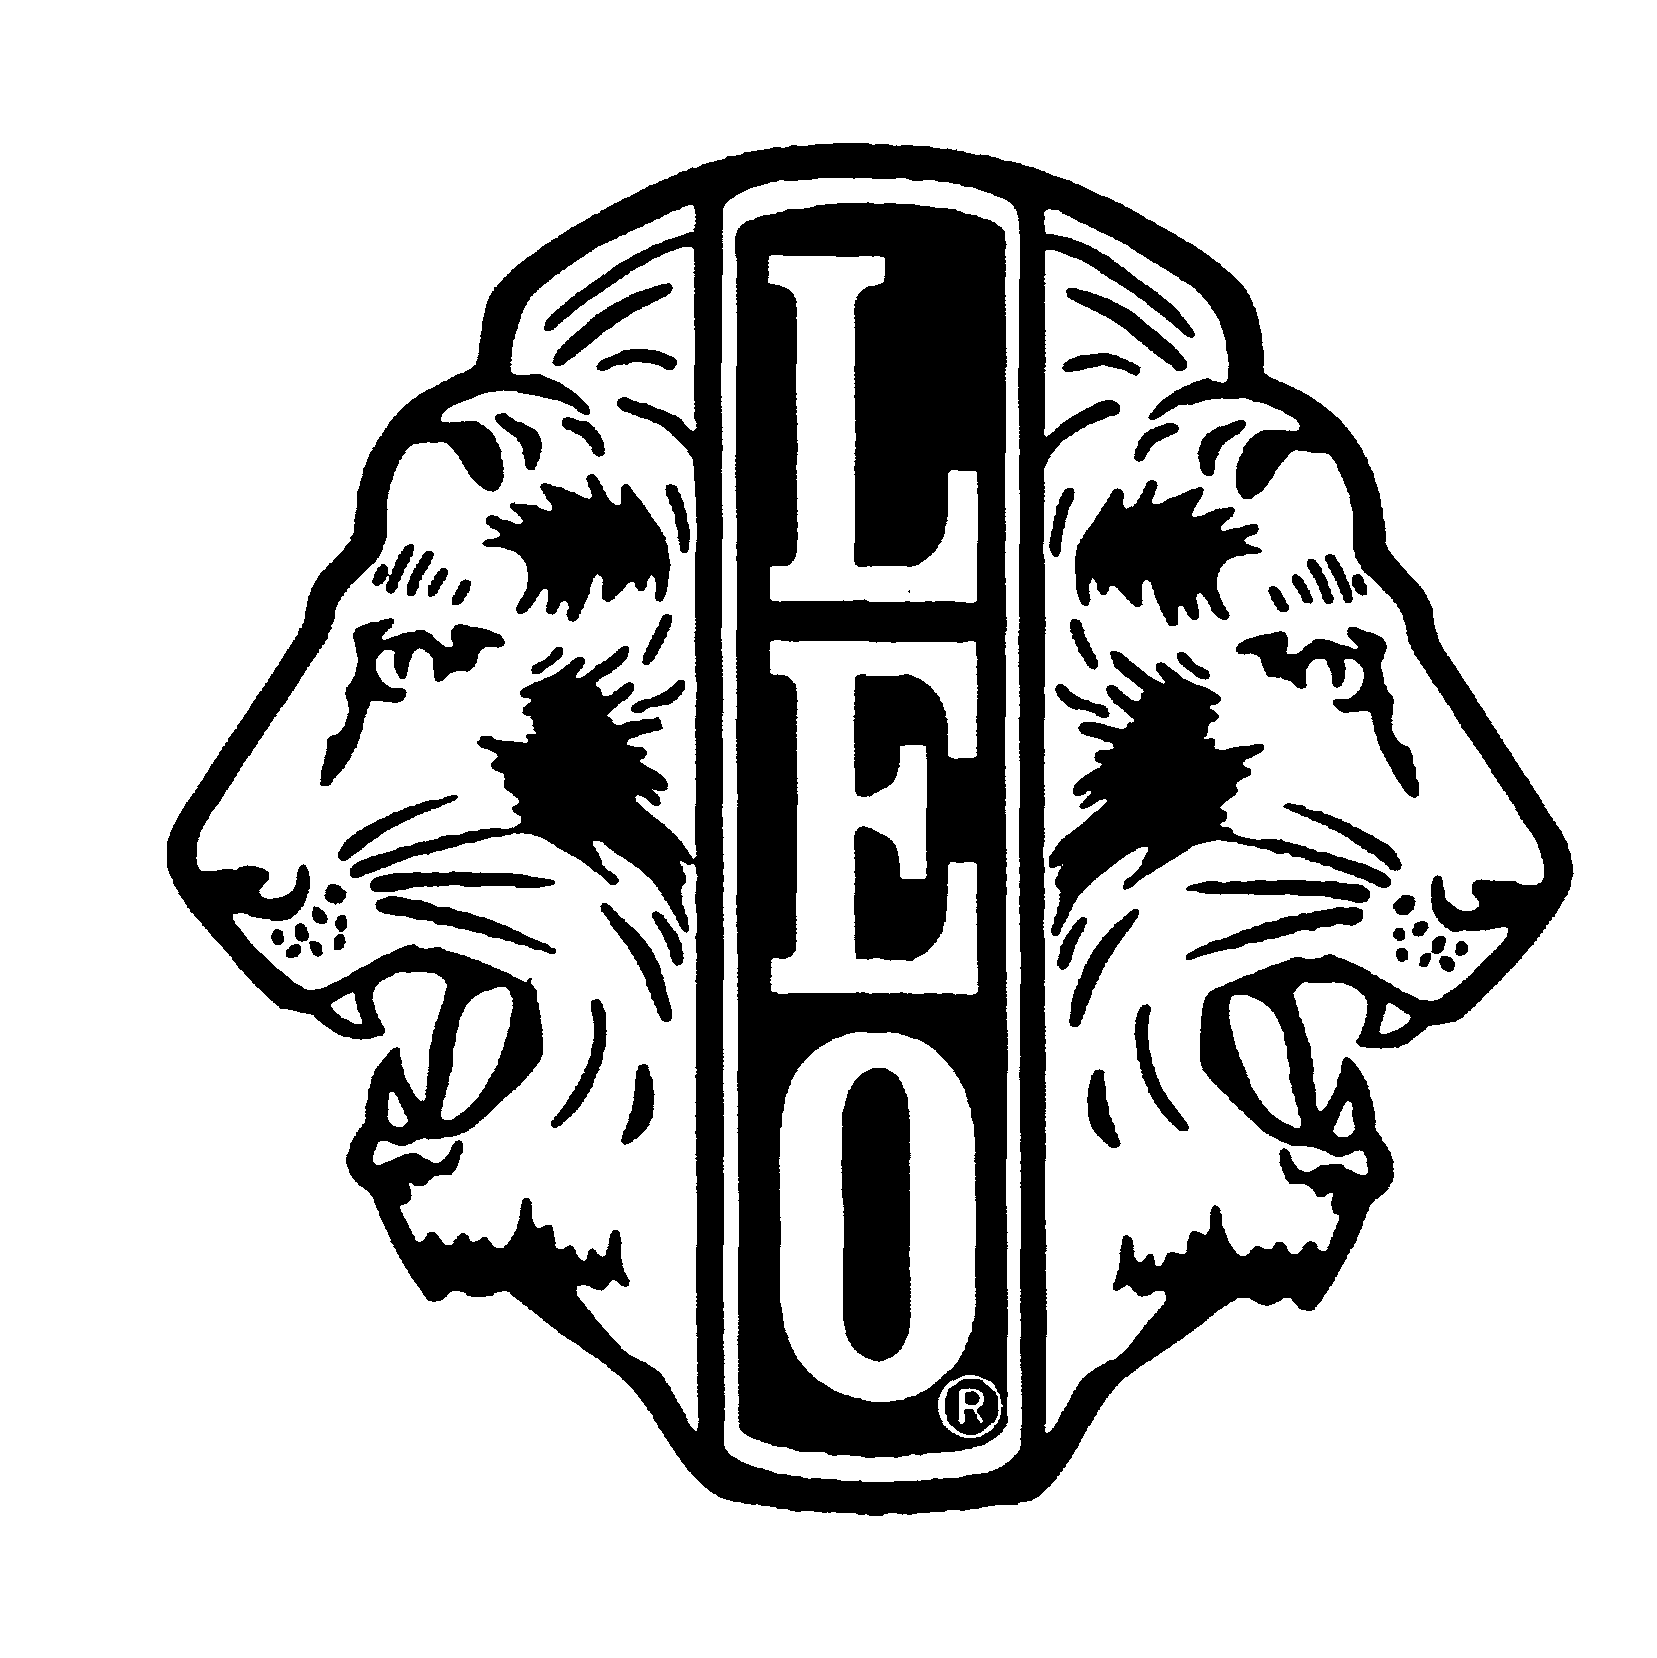 Filename: Leo.png